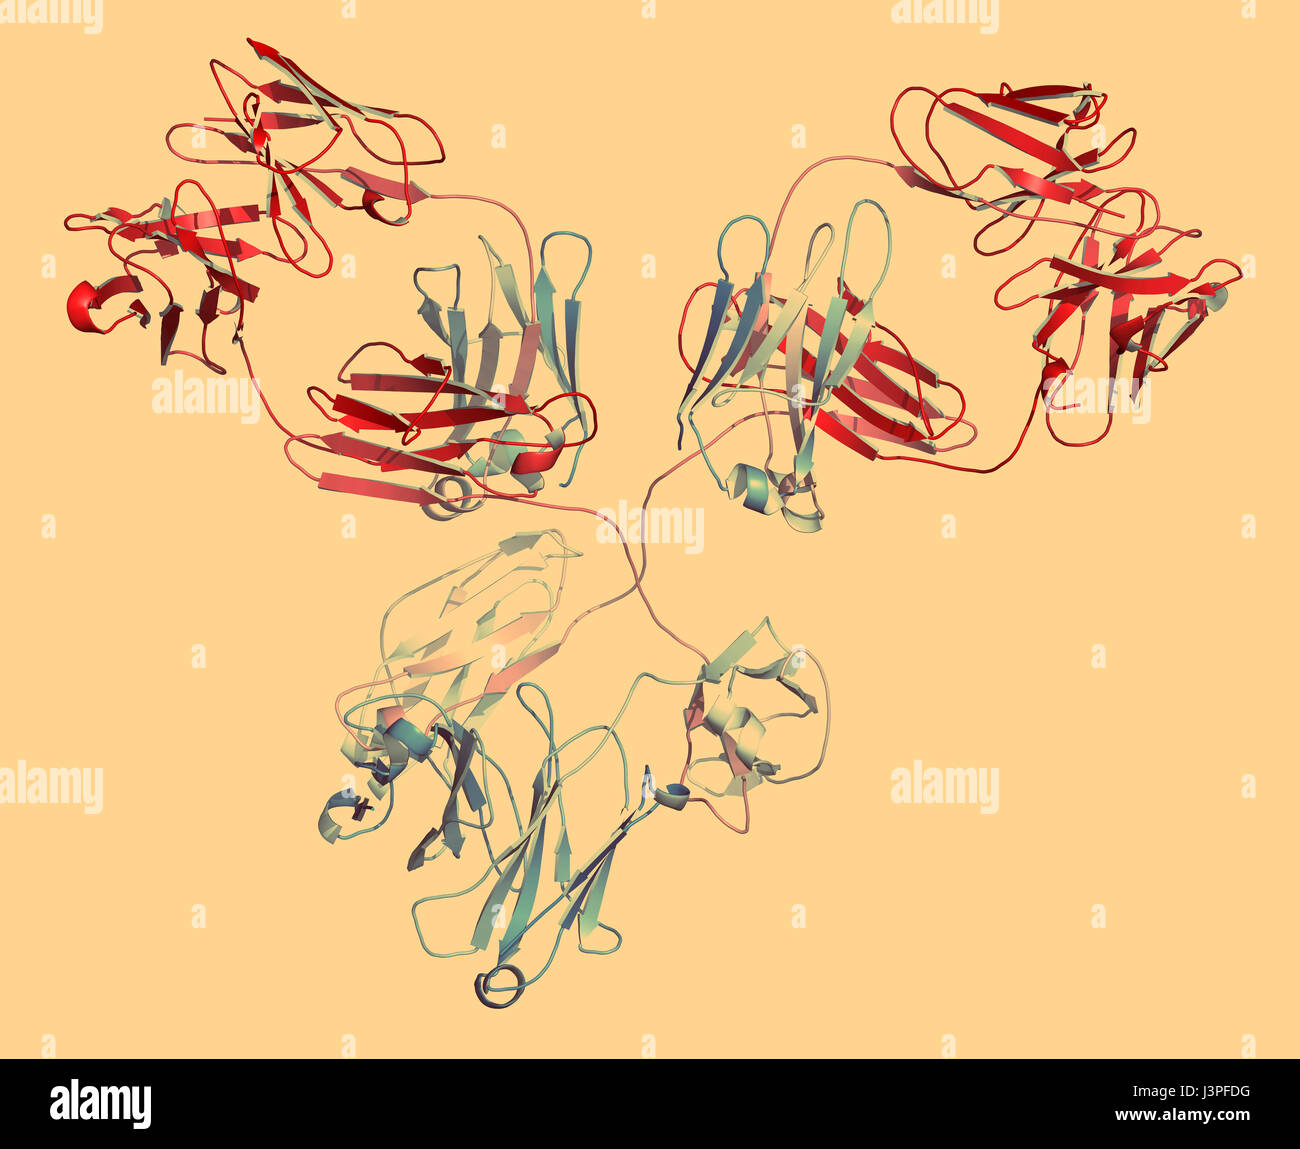 IgG1 monoclonal antibody (immunoglobulin). Many biotech drugs are antibodies. Cartoon representation with backbone gradient coloring. Stock Photo